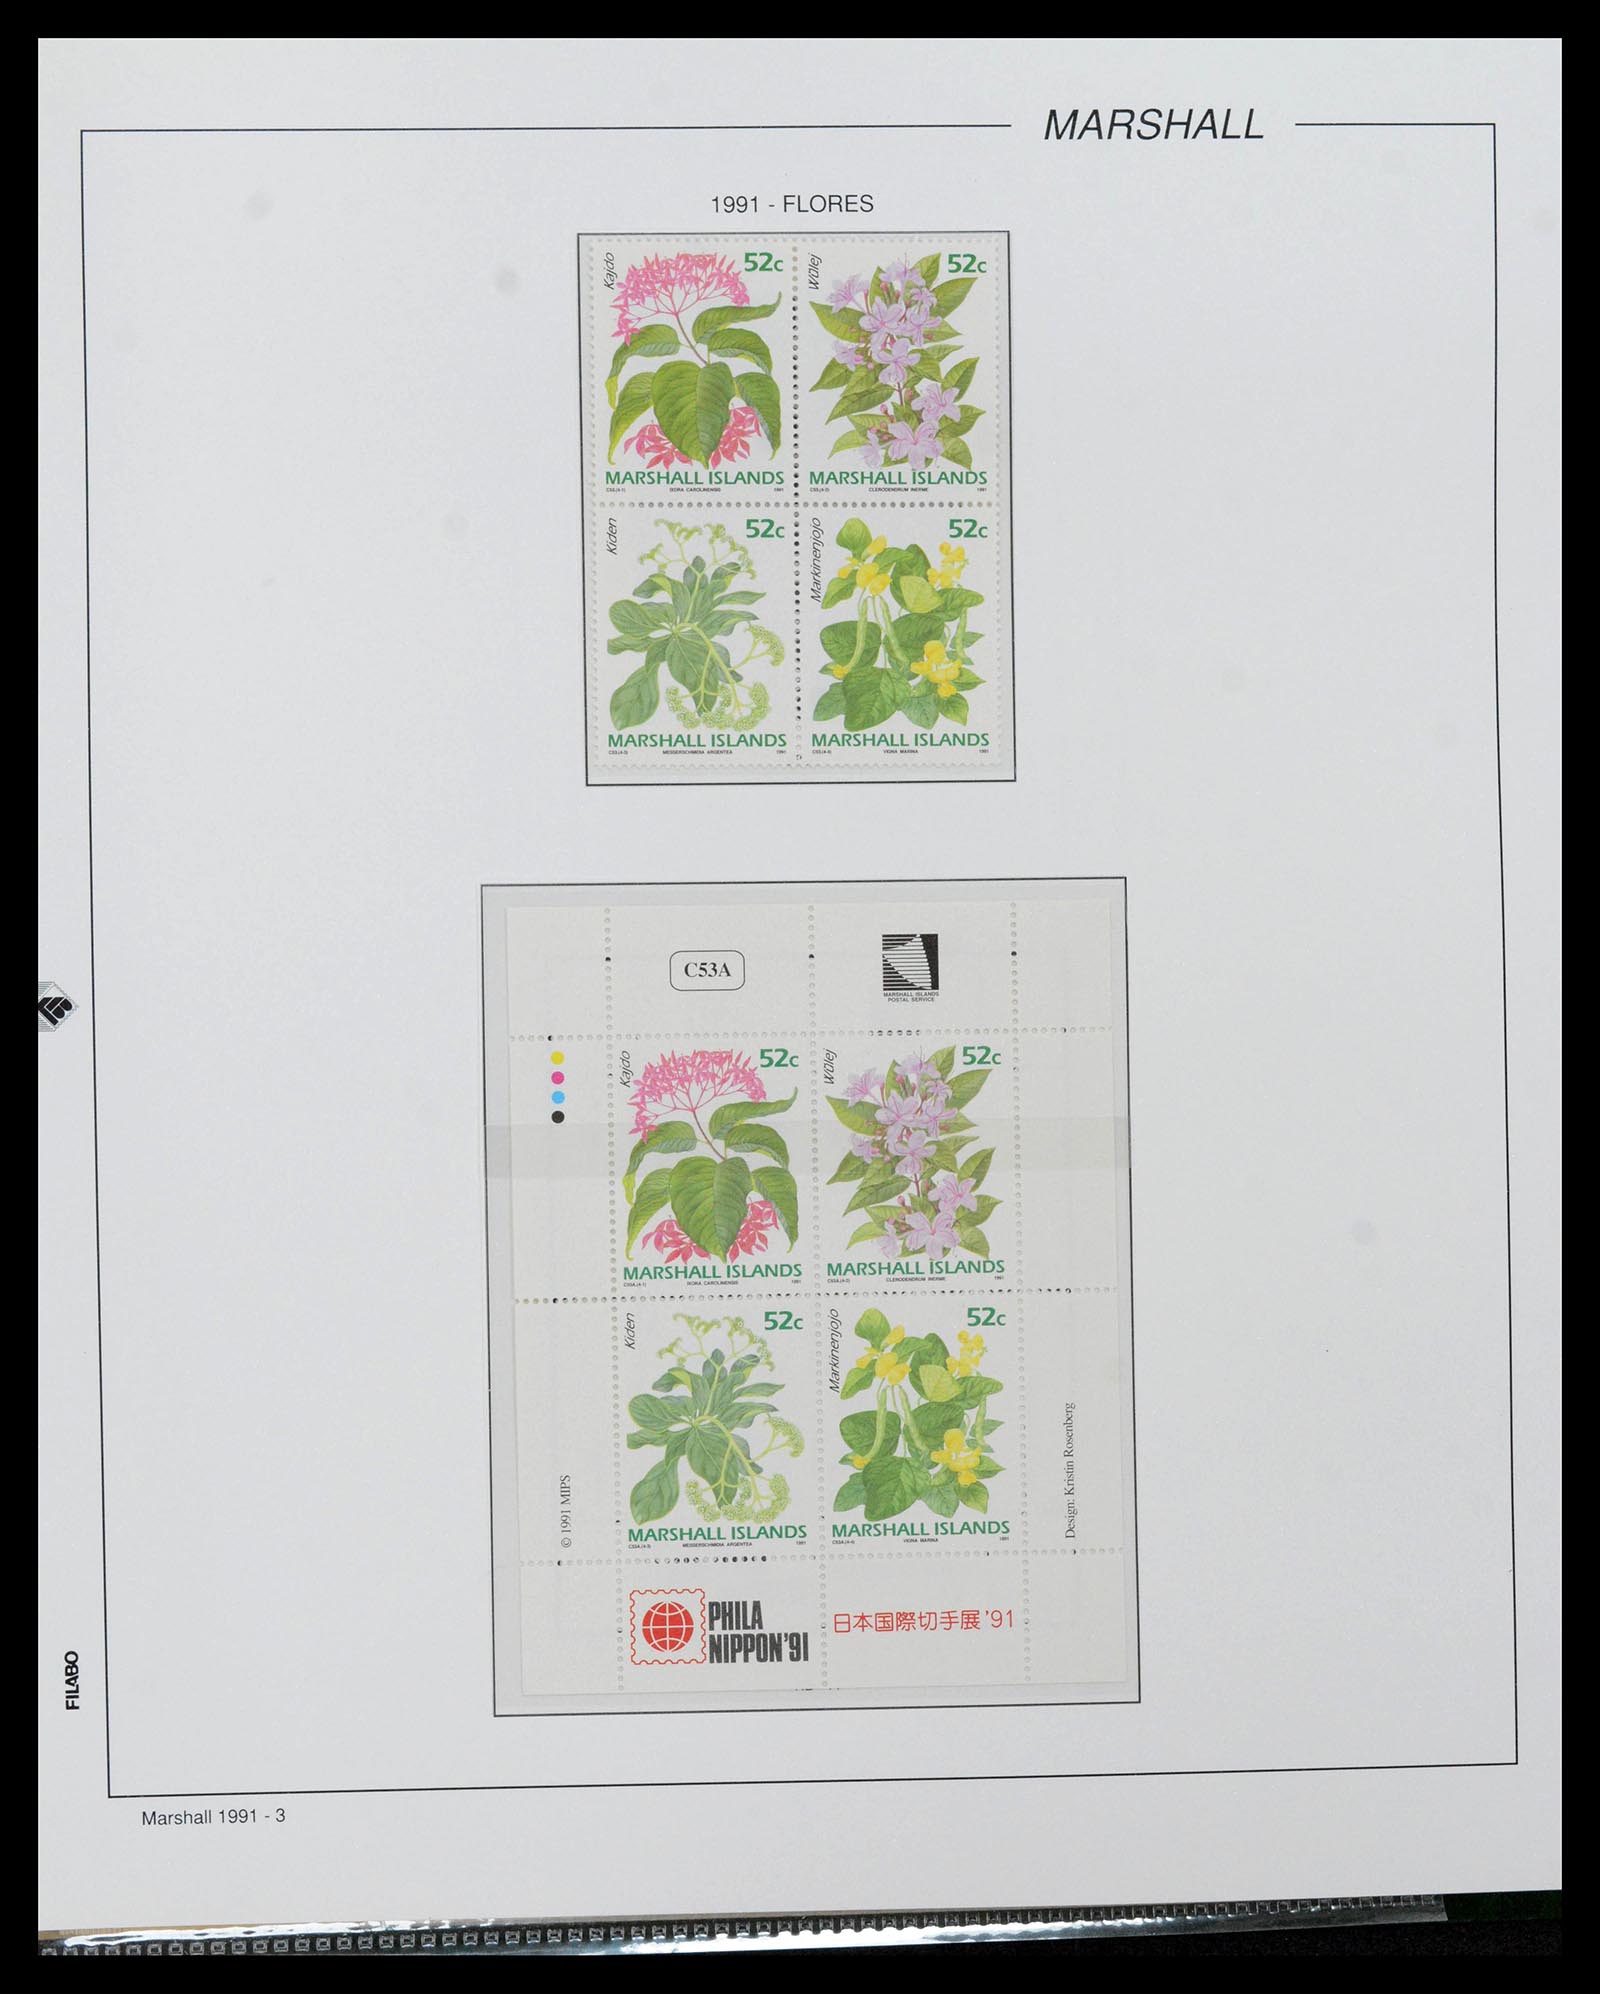 39222 0154 - Stamp collection 39222 Palau, Micronesia and Marshall islands 1980-1995.